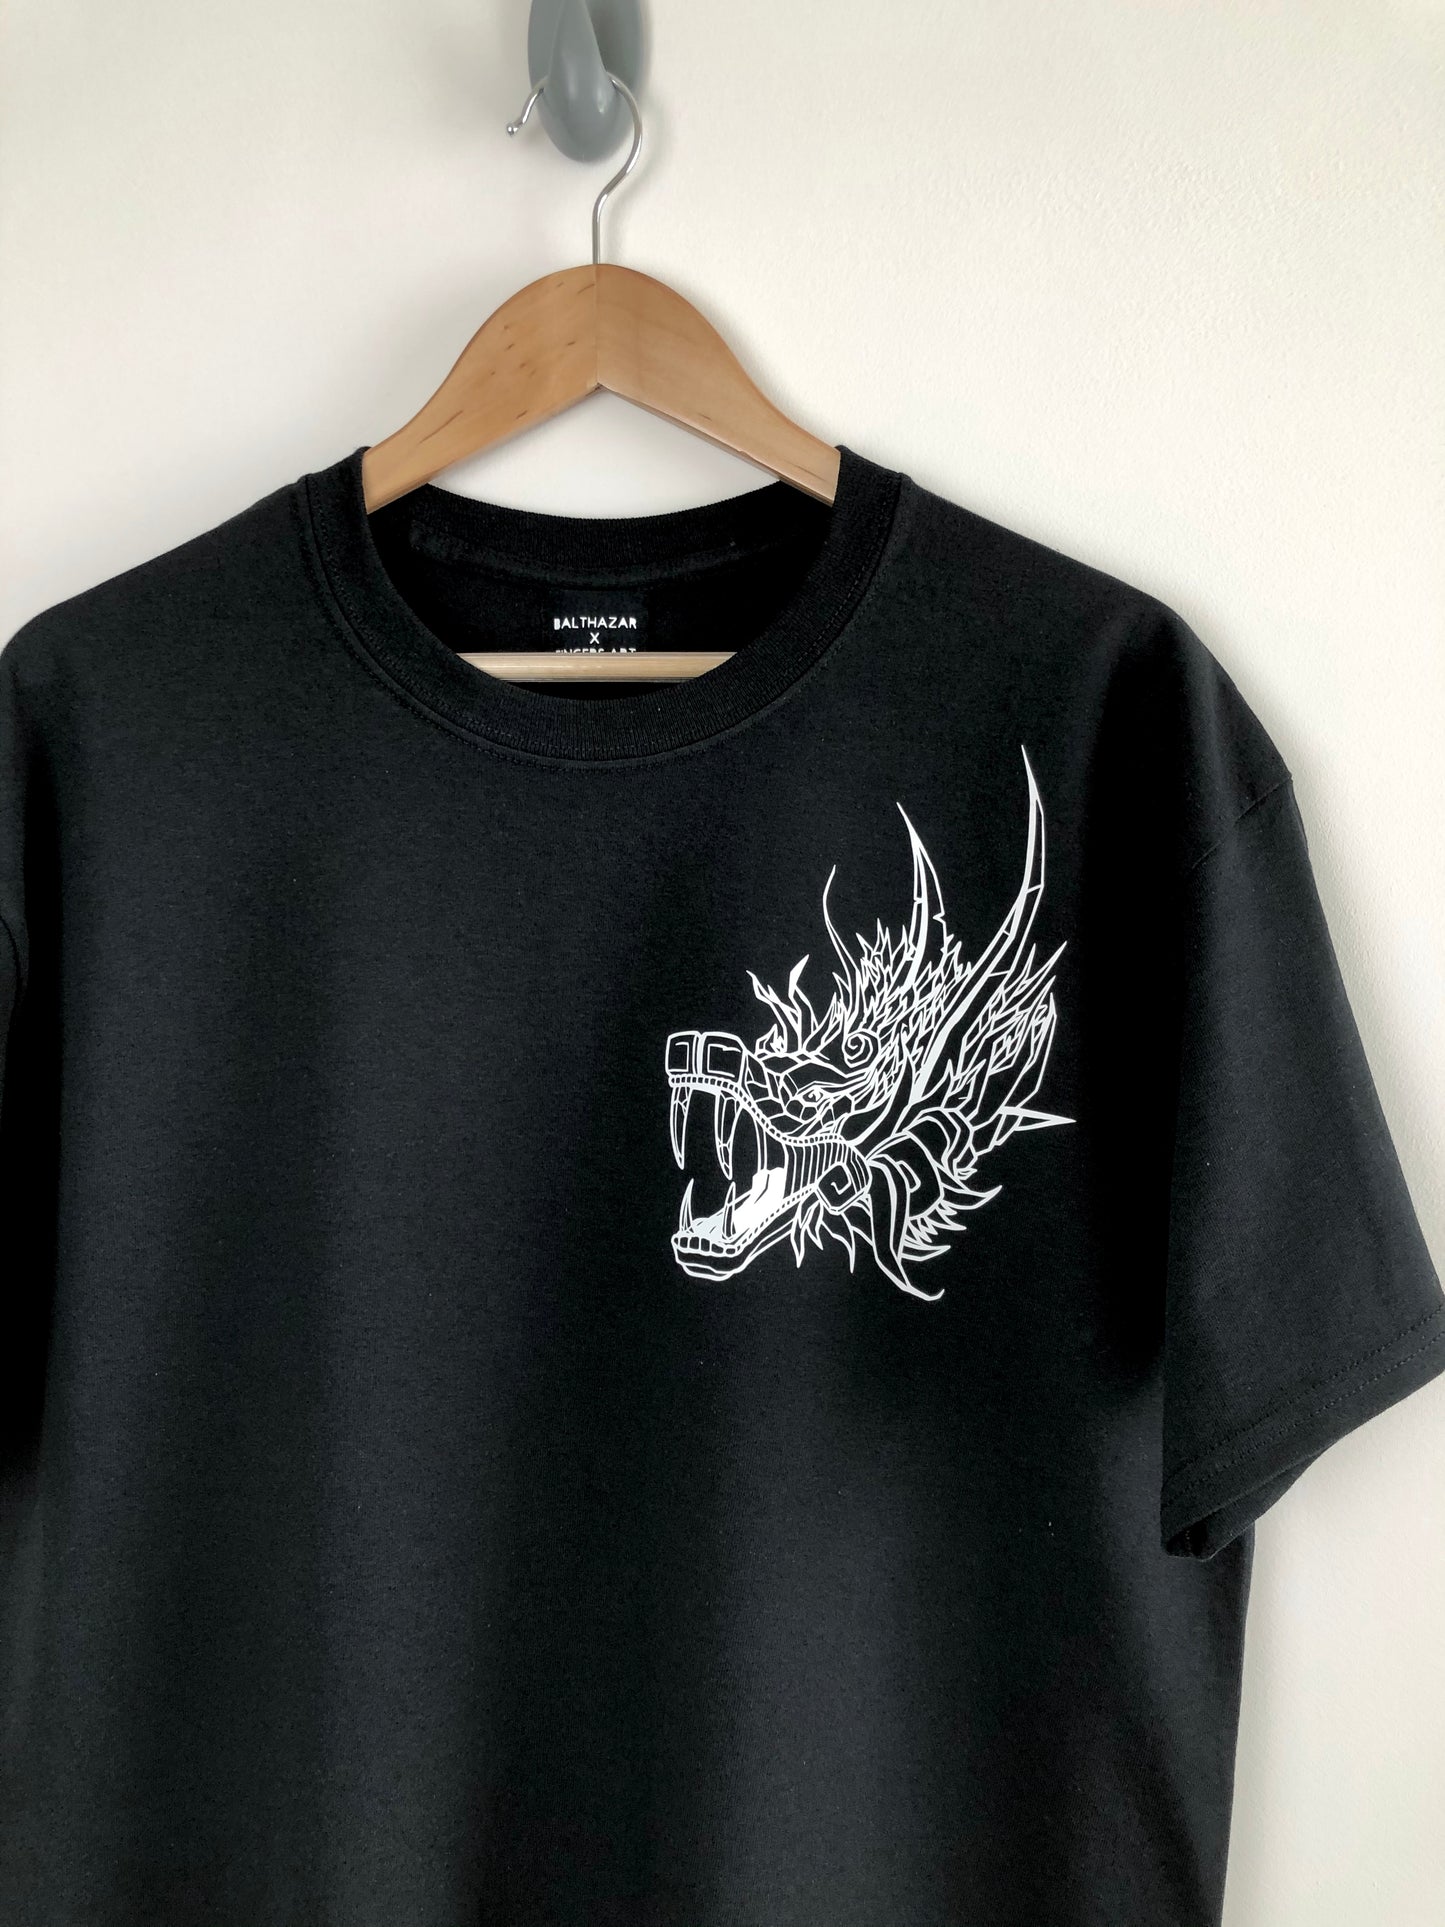 Quetzalcoatl t-shirt - Mayan inspired Dragon tattoo shirt